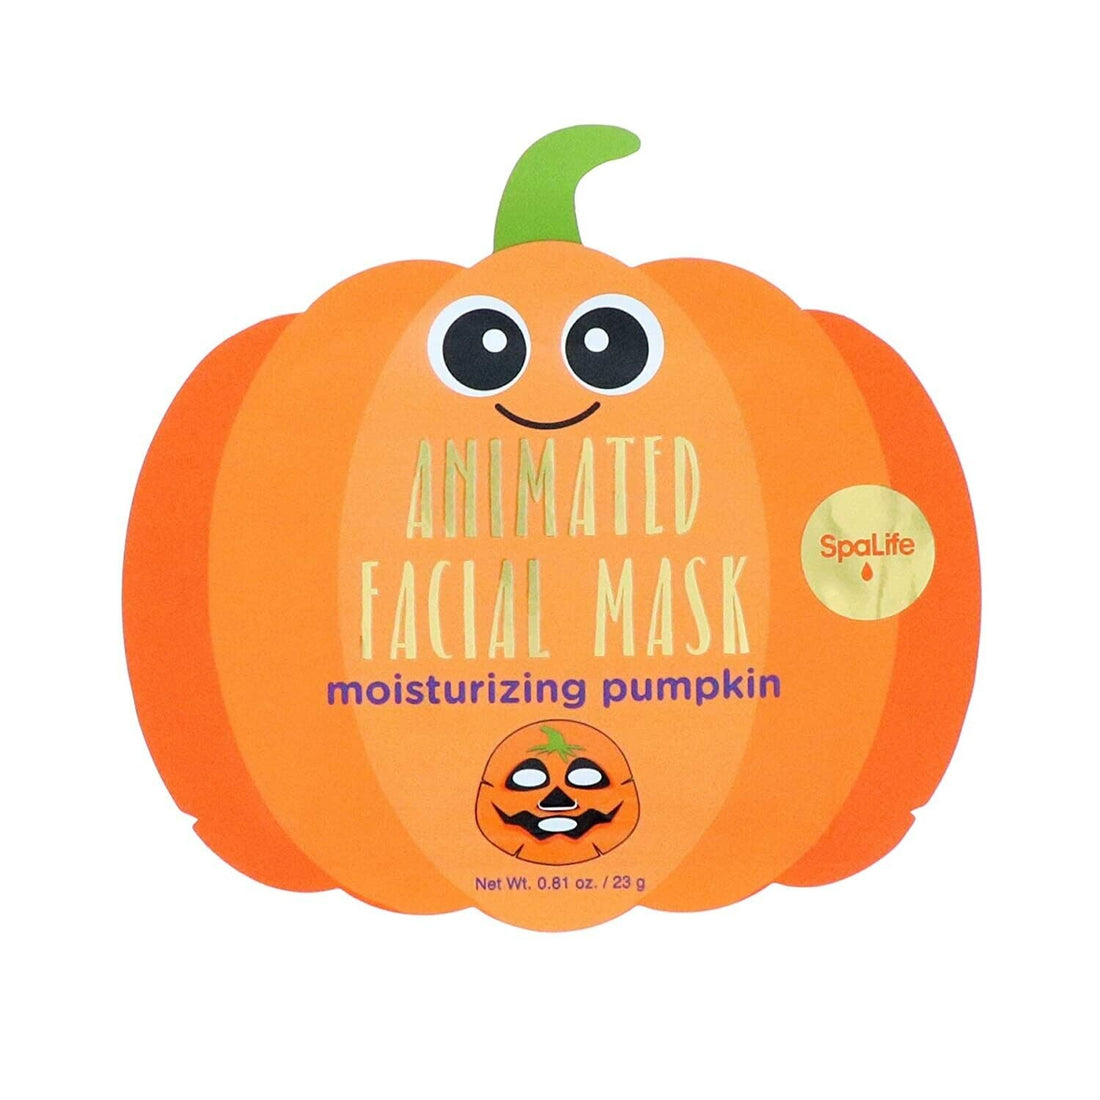 Animated Halloween Facial Mask Moisturizing Pumpkin